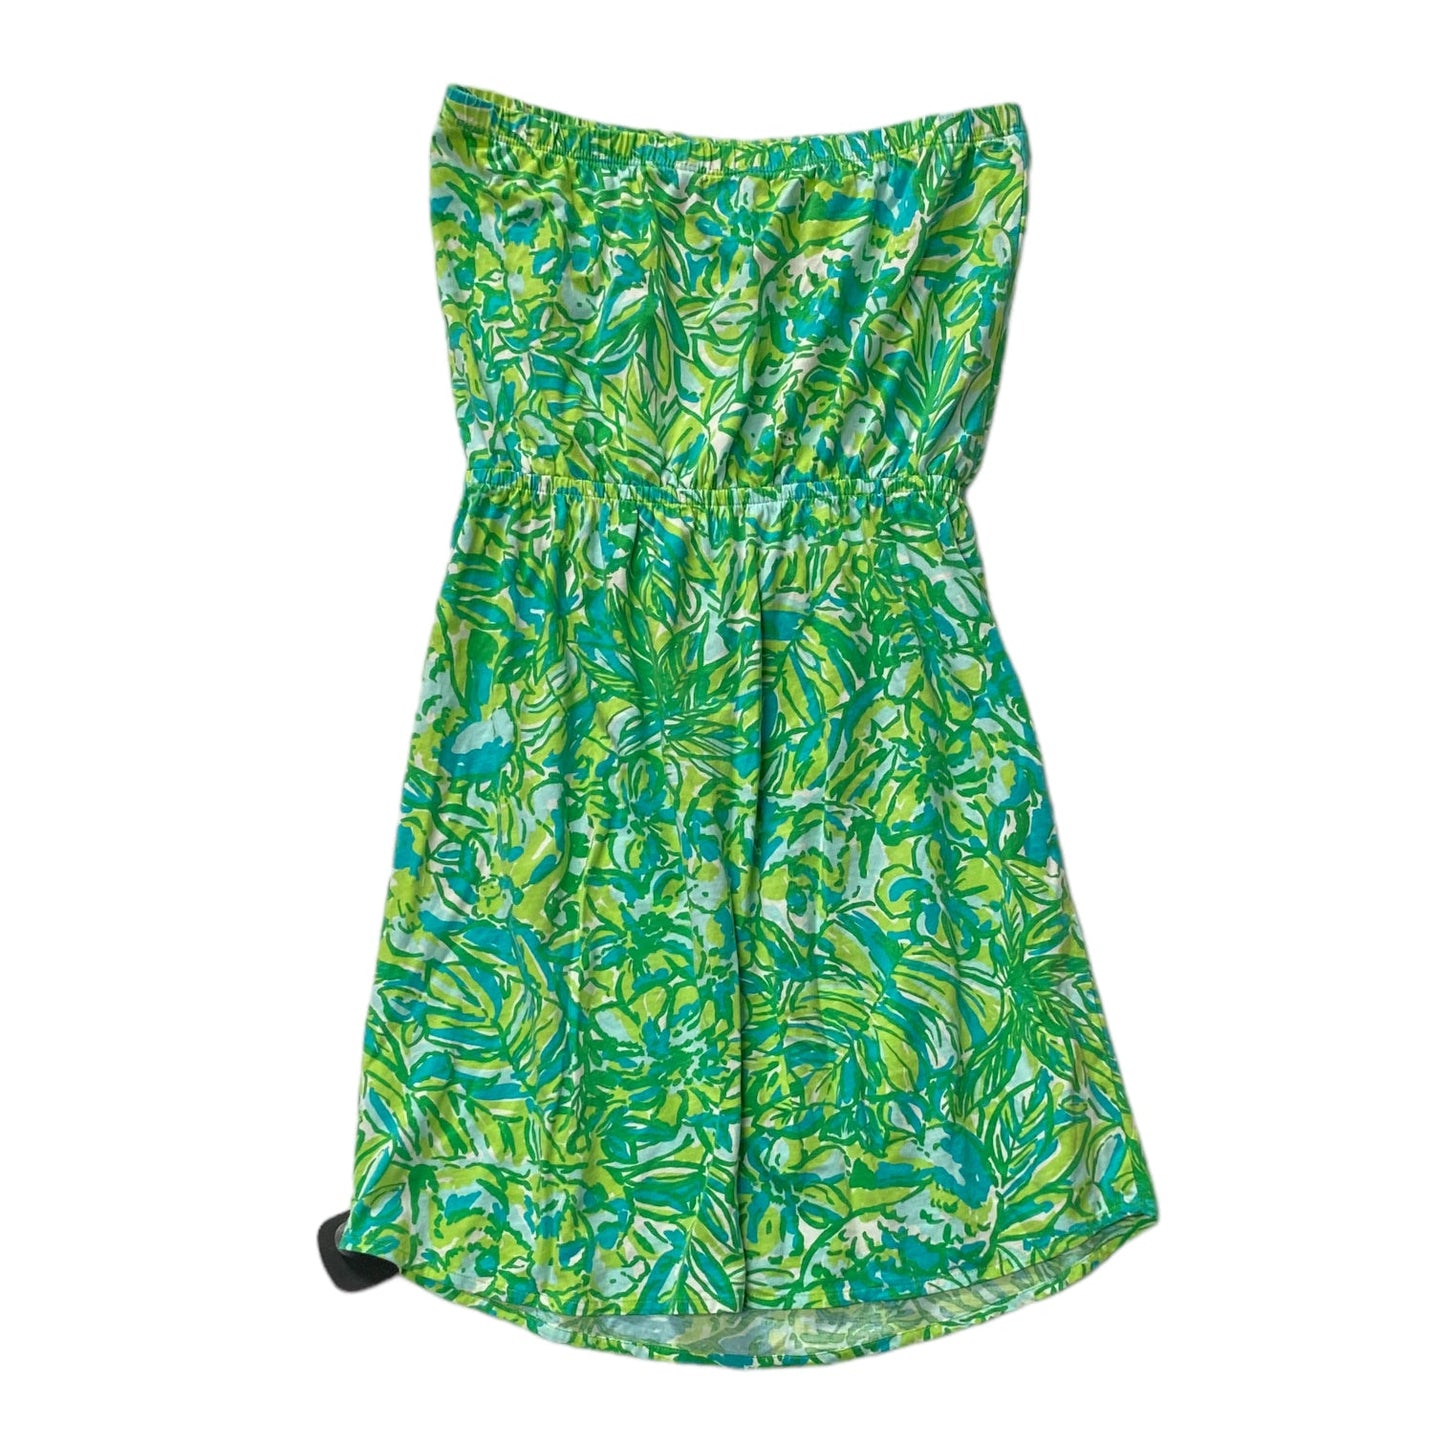 Blue & Green Dress Designer Lilly Pulitzer, Size S